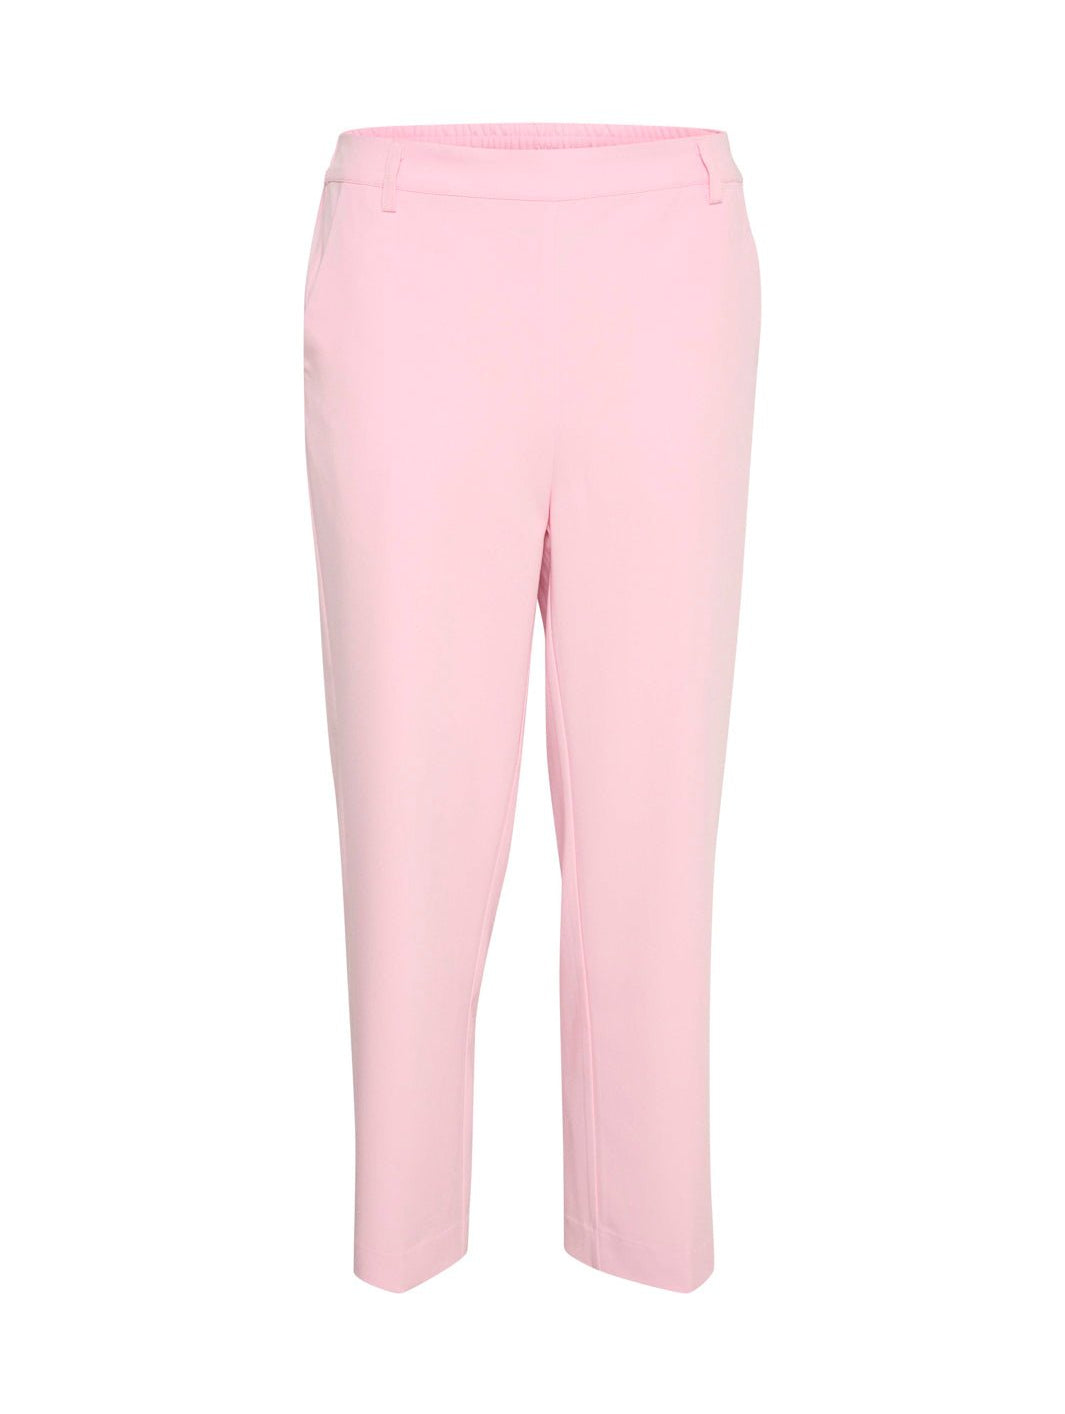 Kaffe KAsakura HW cropped pants pink mist - Online-Mode